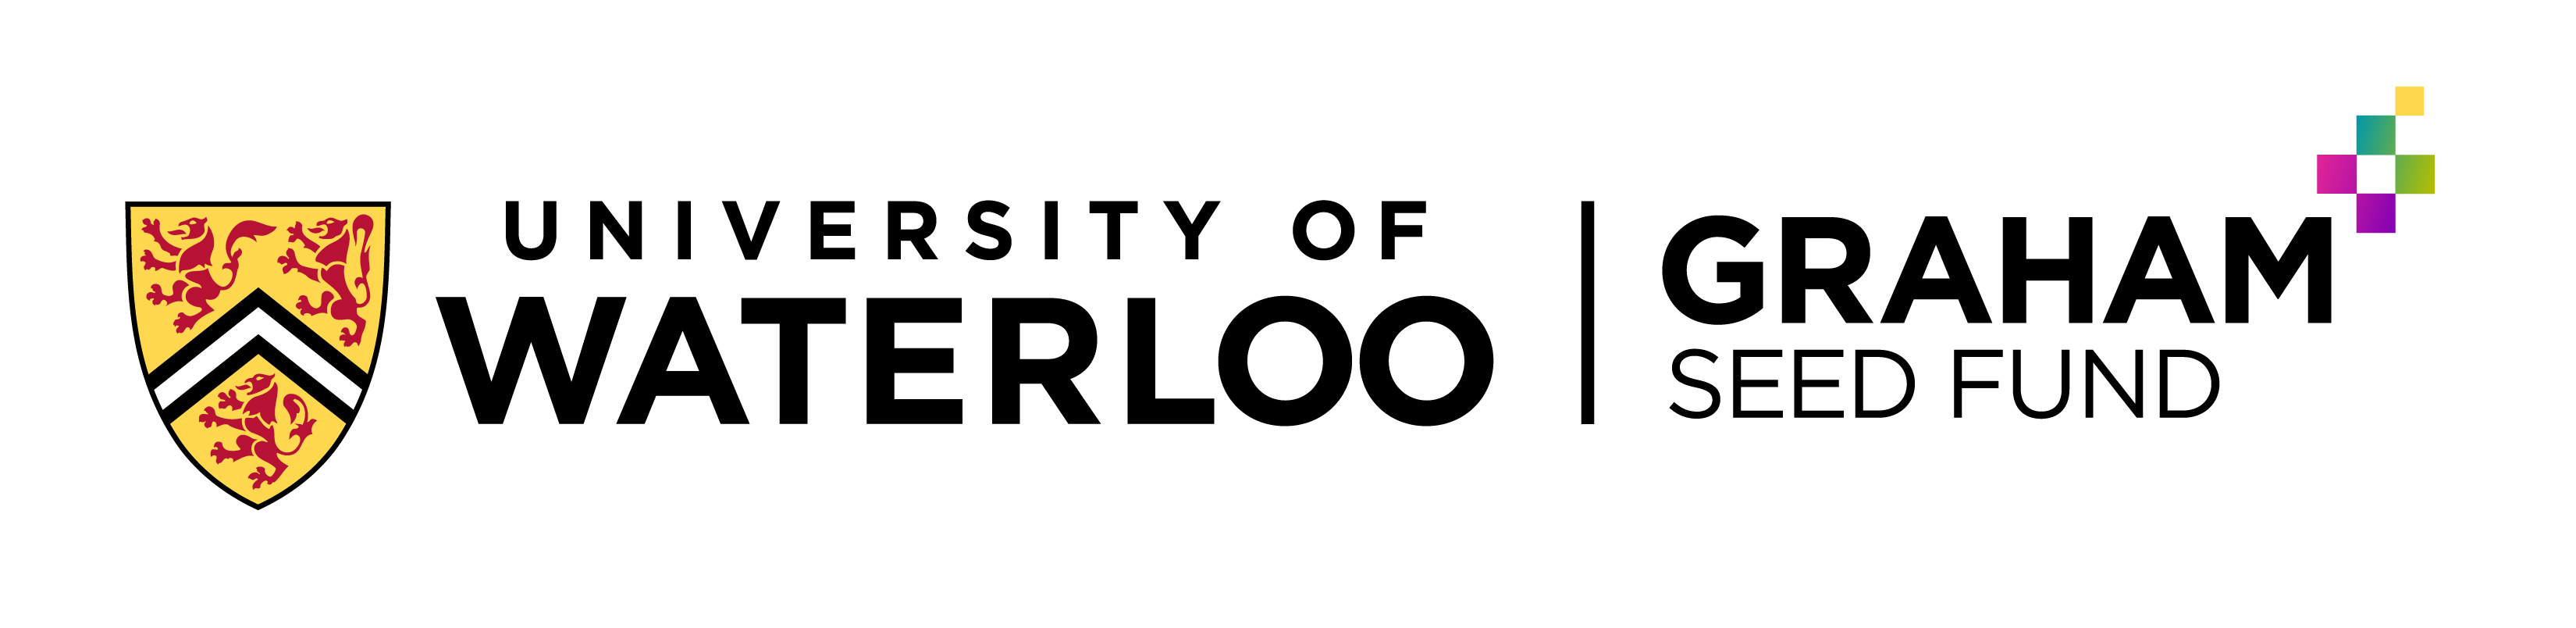 University of Waterloo - Graham Seed Fund logo